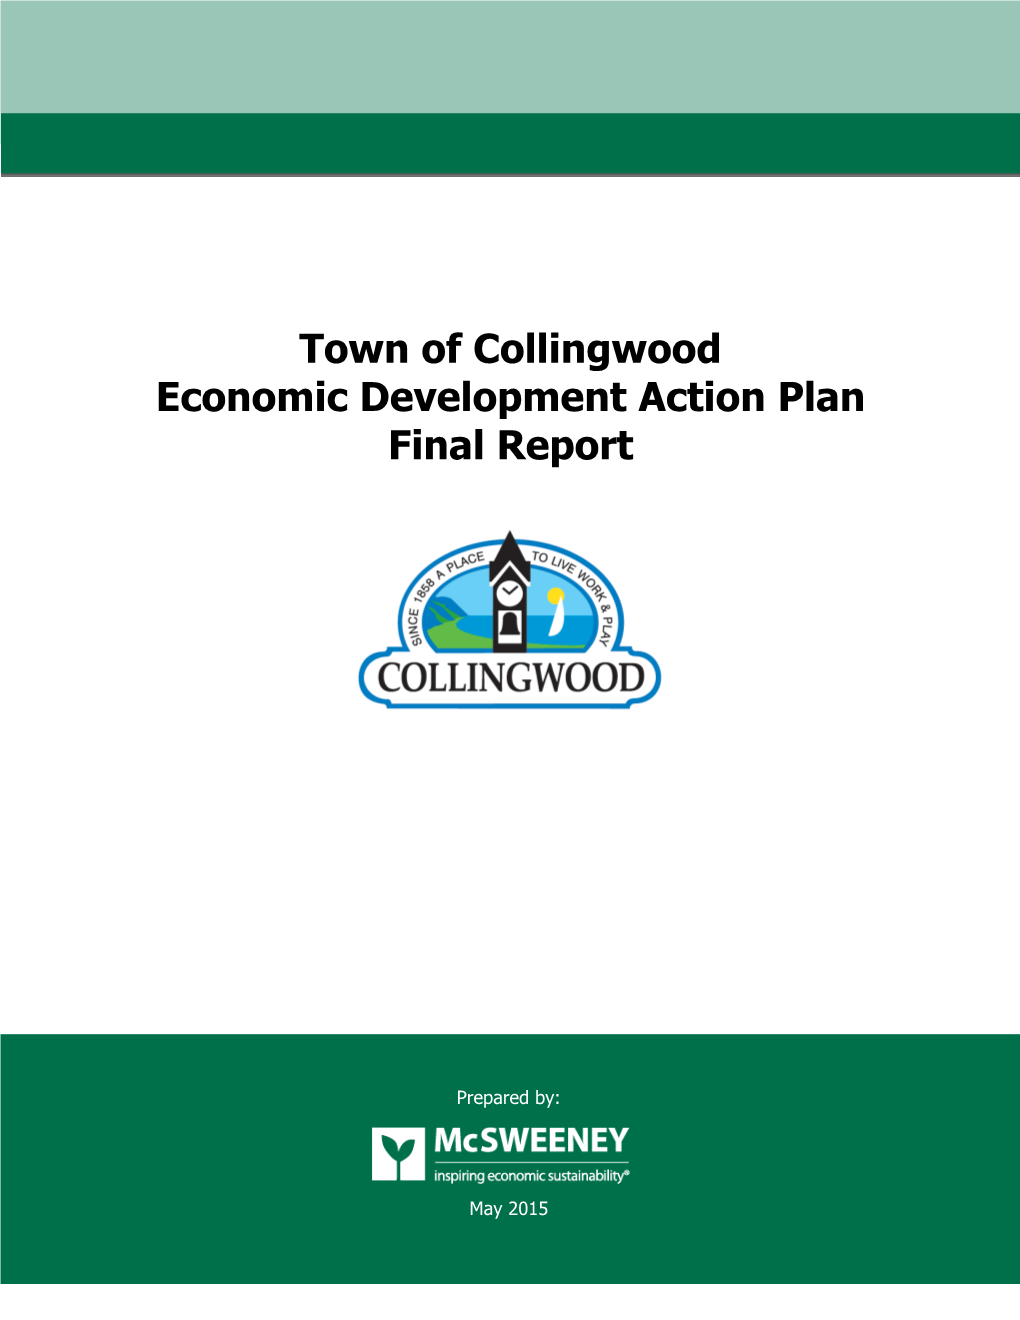 Town of Collingwood Economic Development Action Plan Final Report